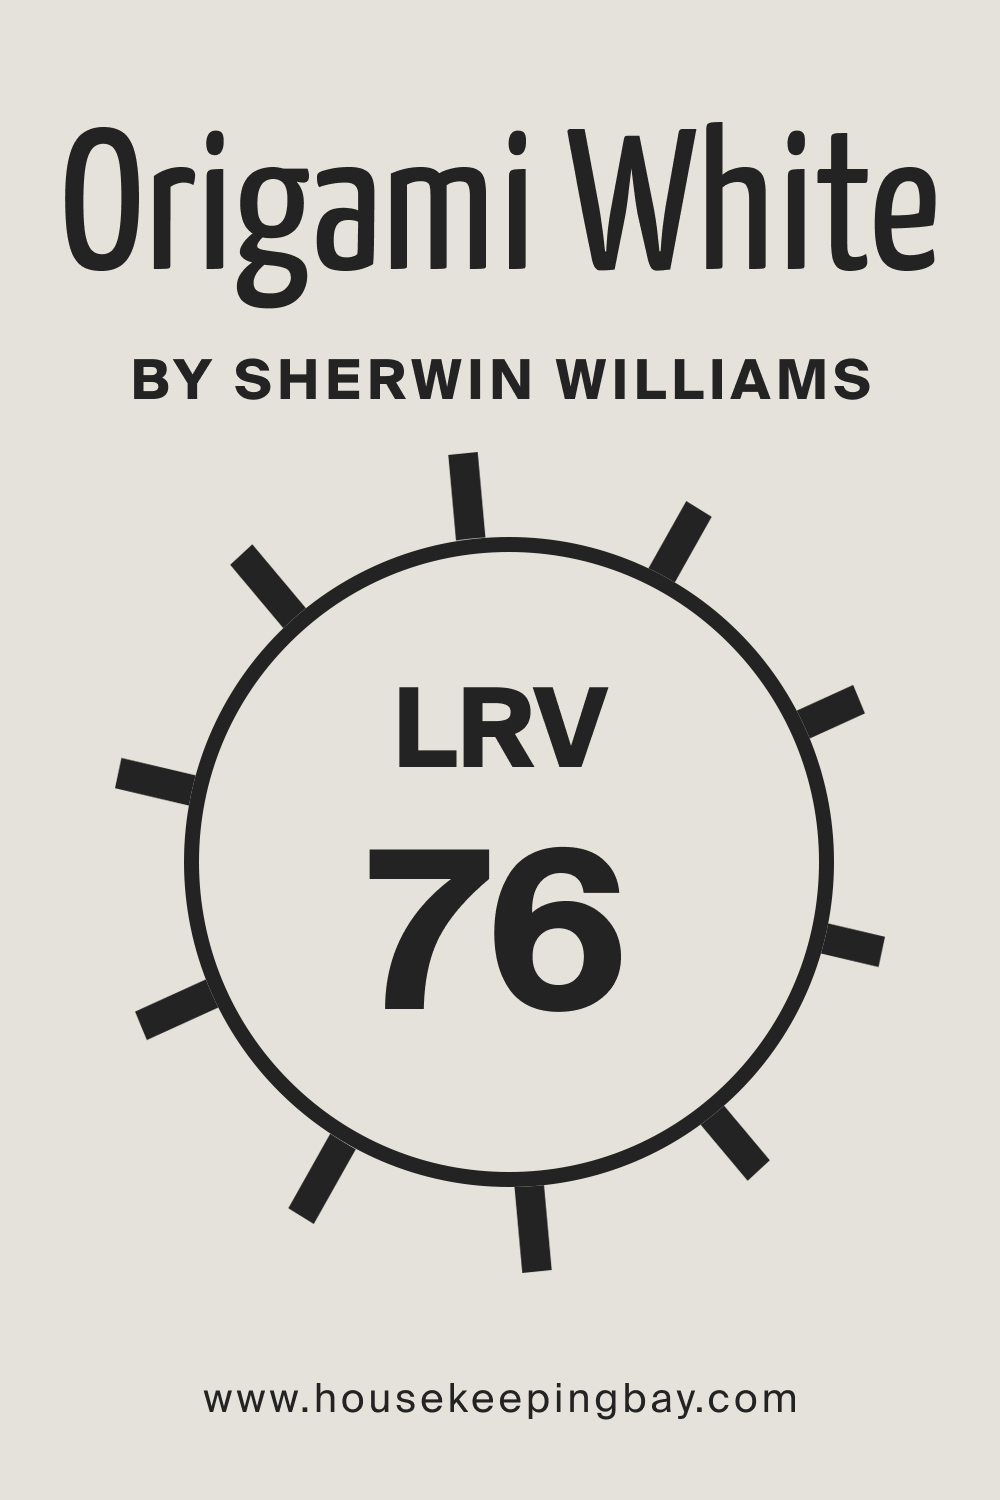 Origami White SW 7636 by Sherwin Williams. LRV – 76